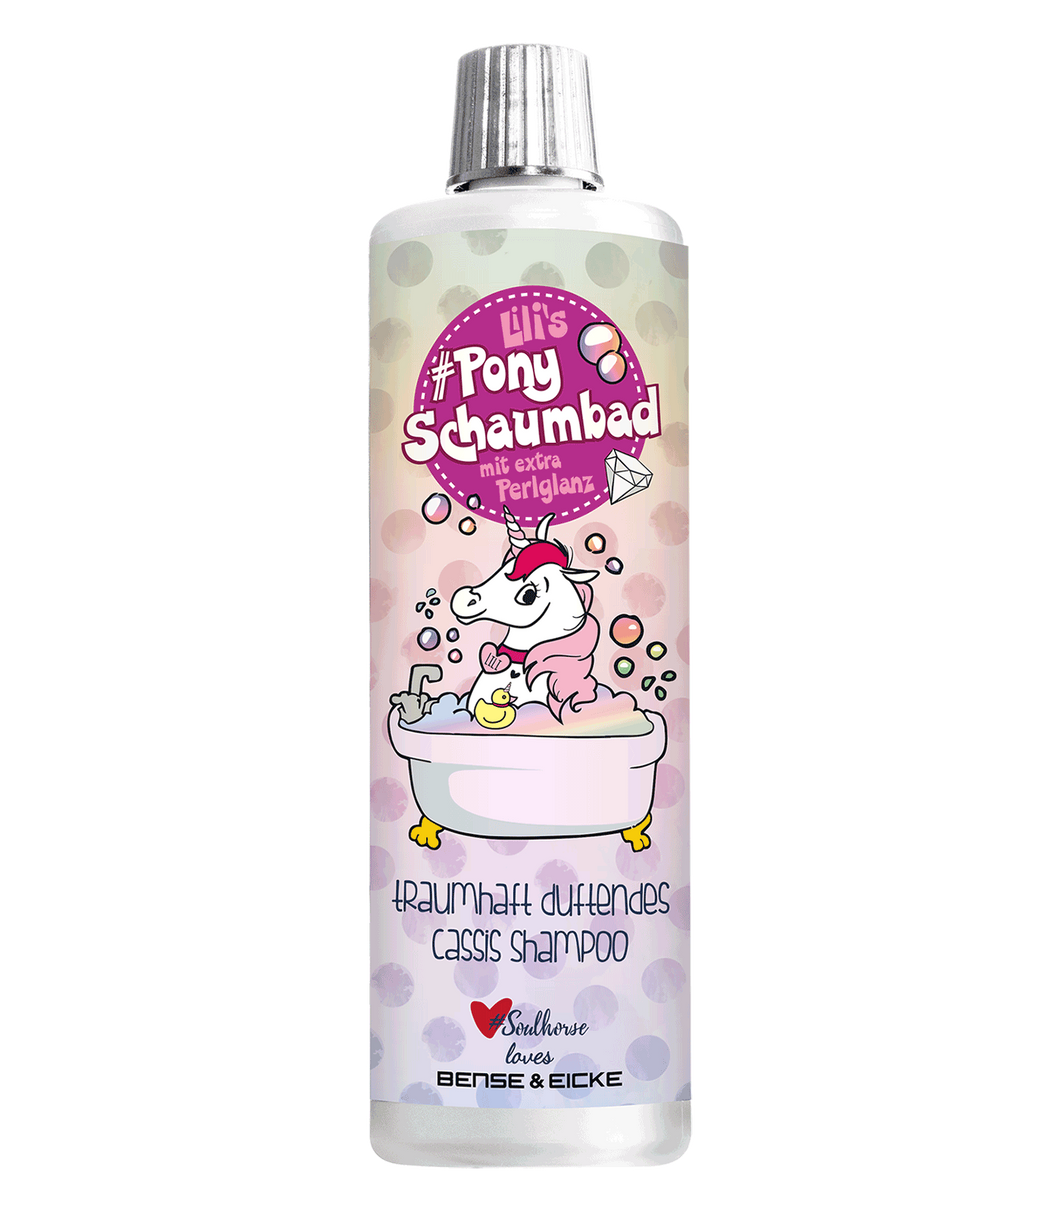 Lills pony foam bubble bath and shampoo